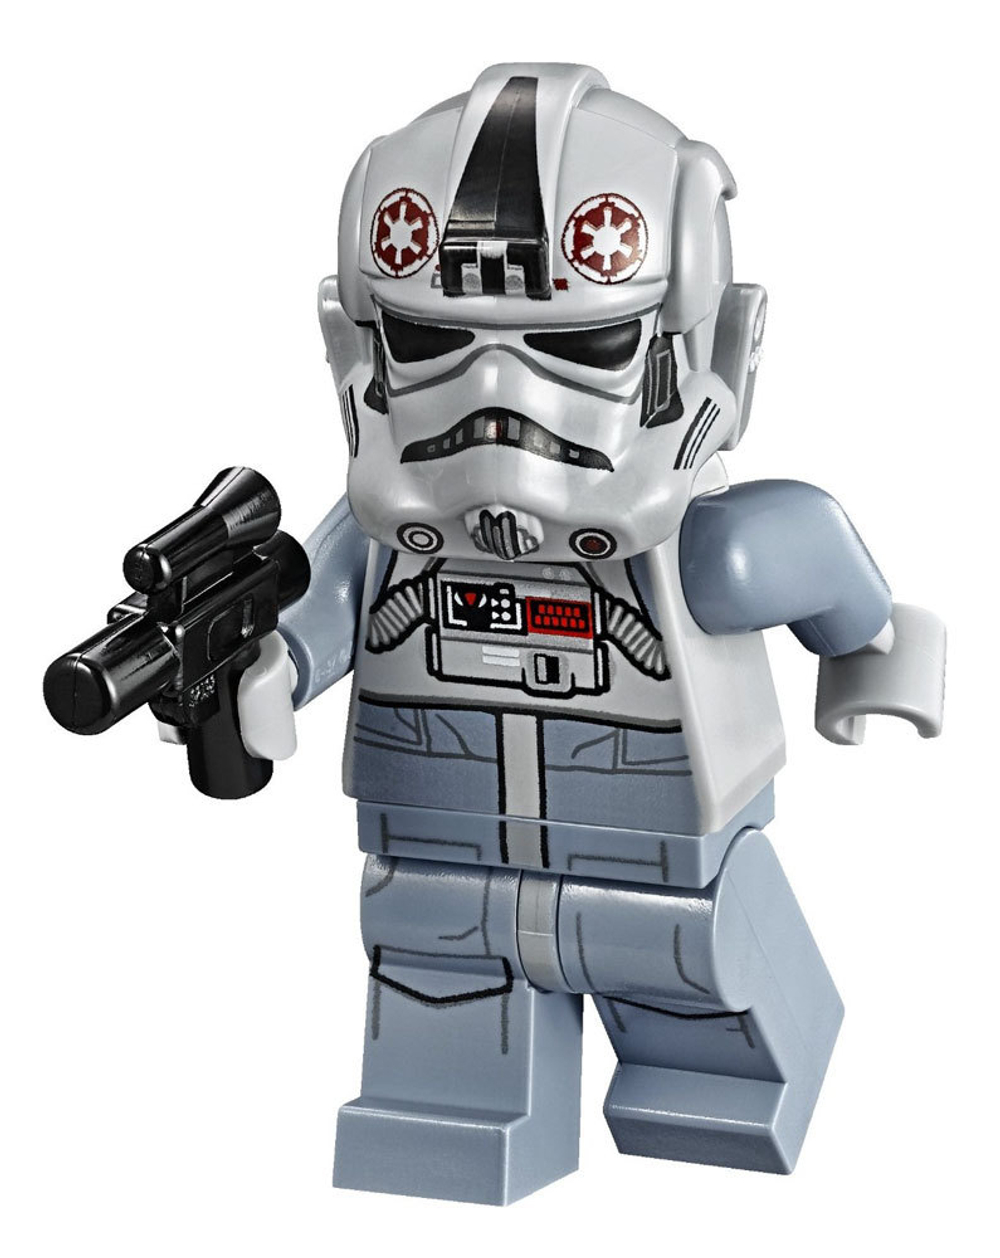 LEGO Star Wars: AT-AT 75075 — AT-AT Microfighter — Лего Звездные войны Стар Ворз